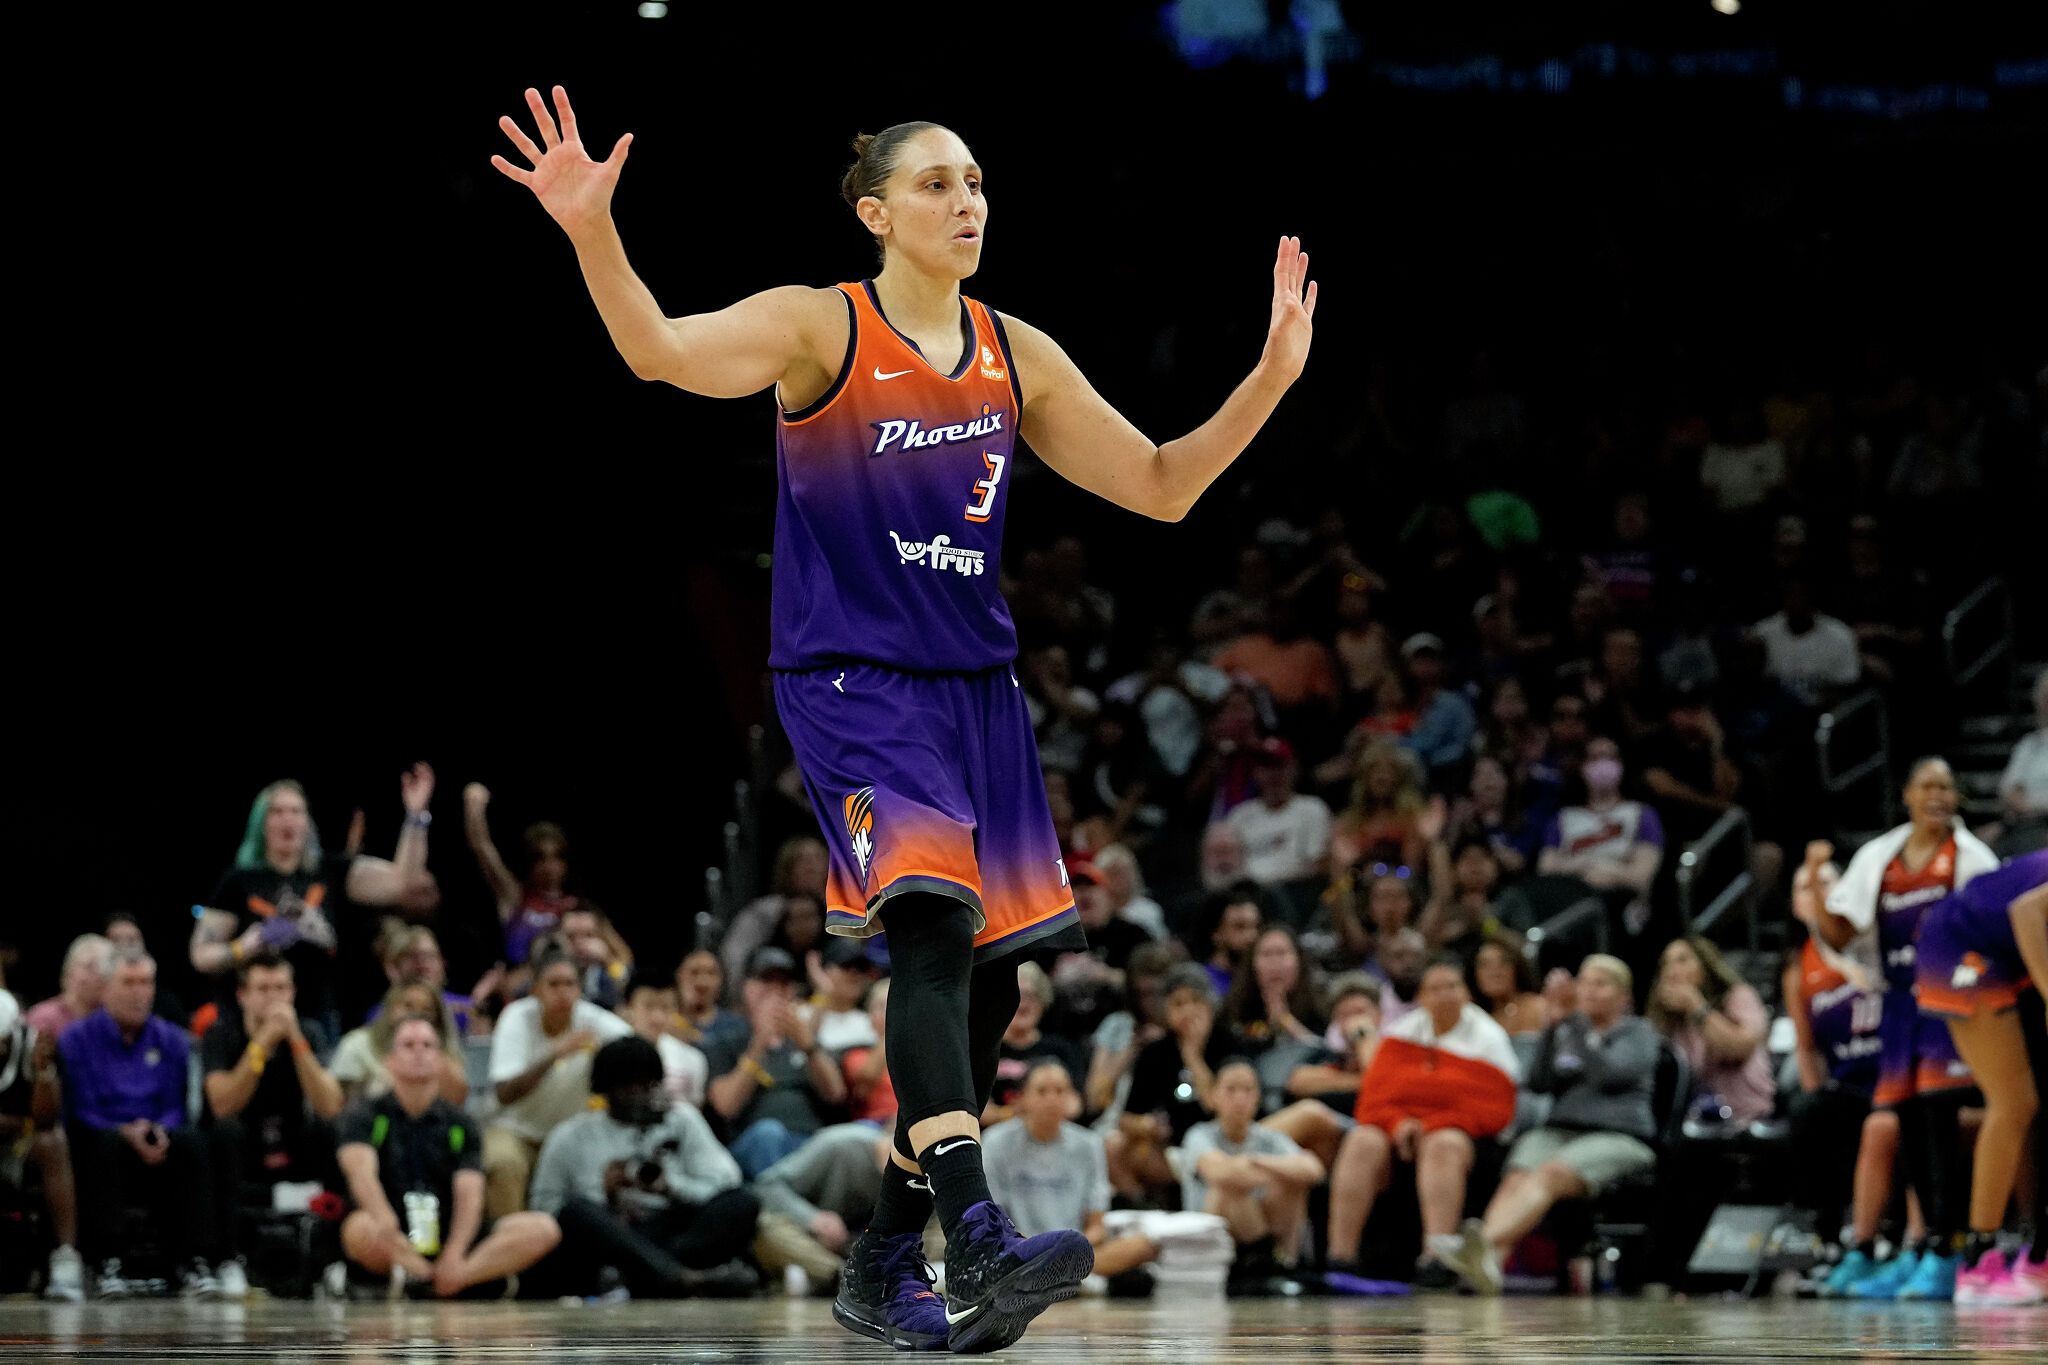 UConn women's great Diana Taurasi praises WNBA rookie Nika Mühl